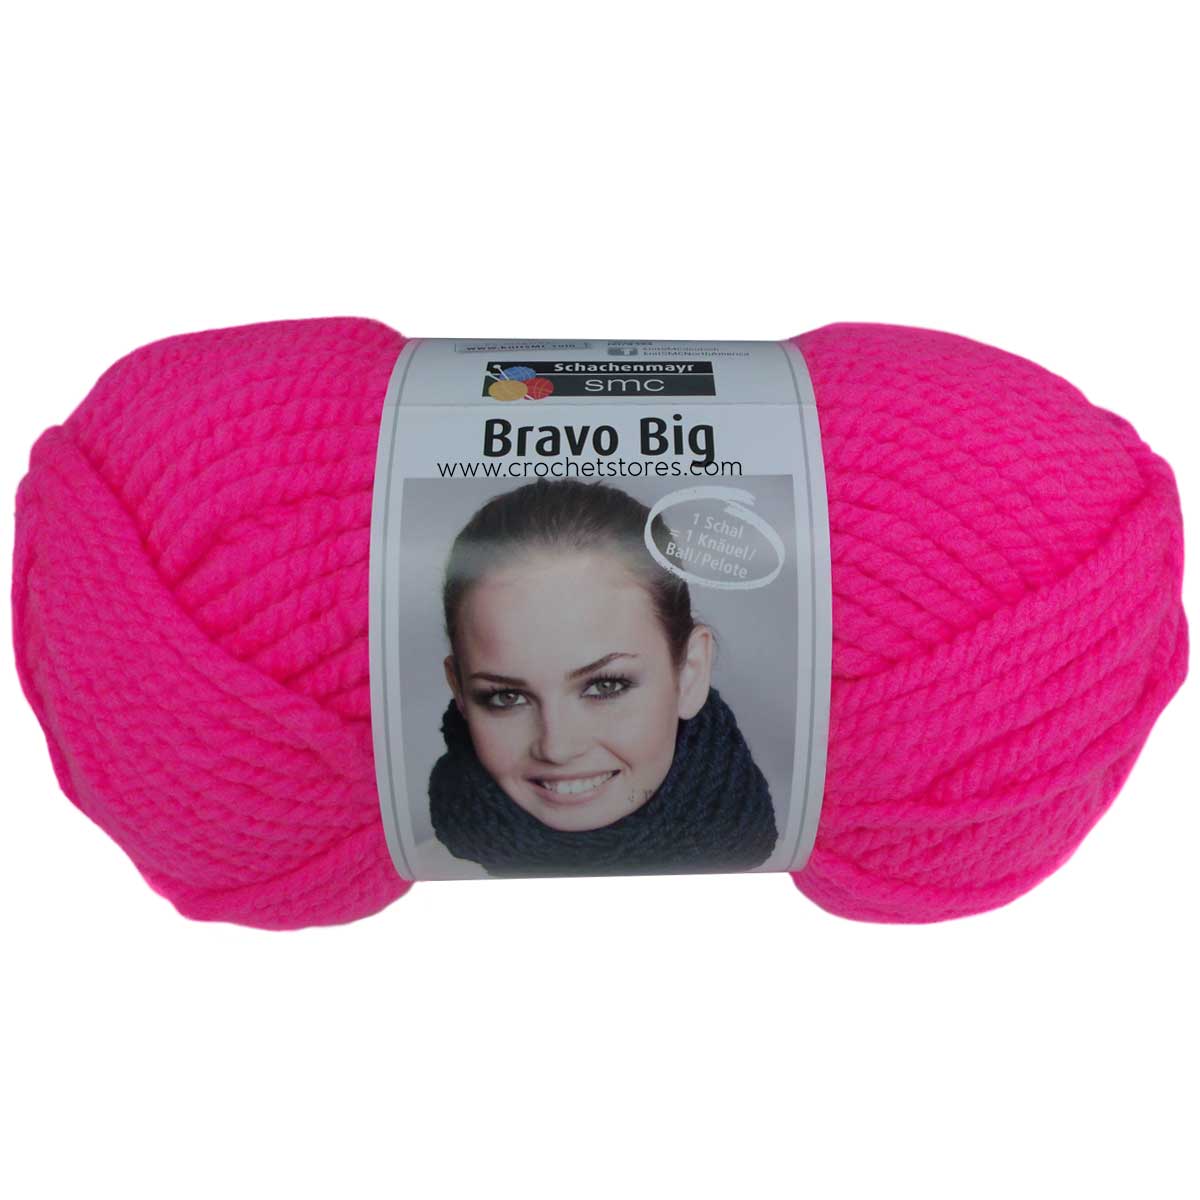 BRAVO BIG - Crochetstores9807705-82344082700912131